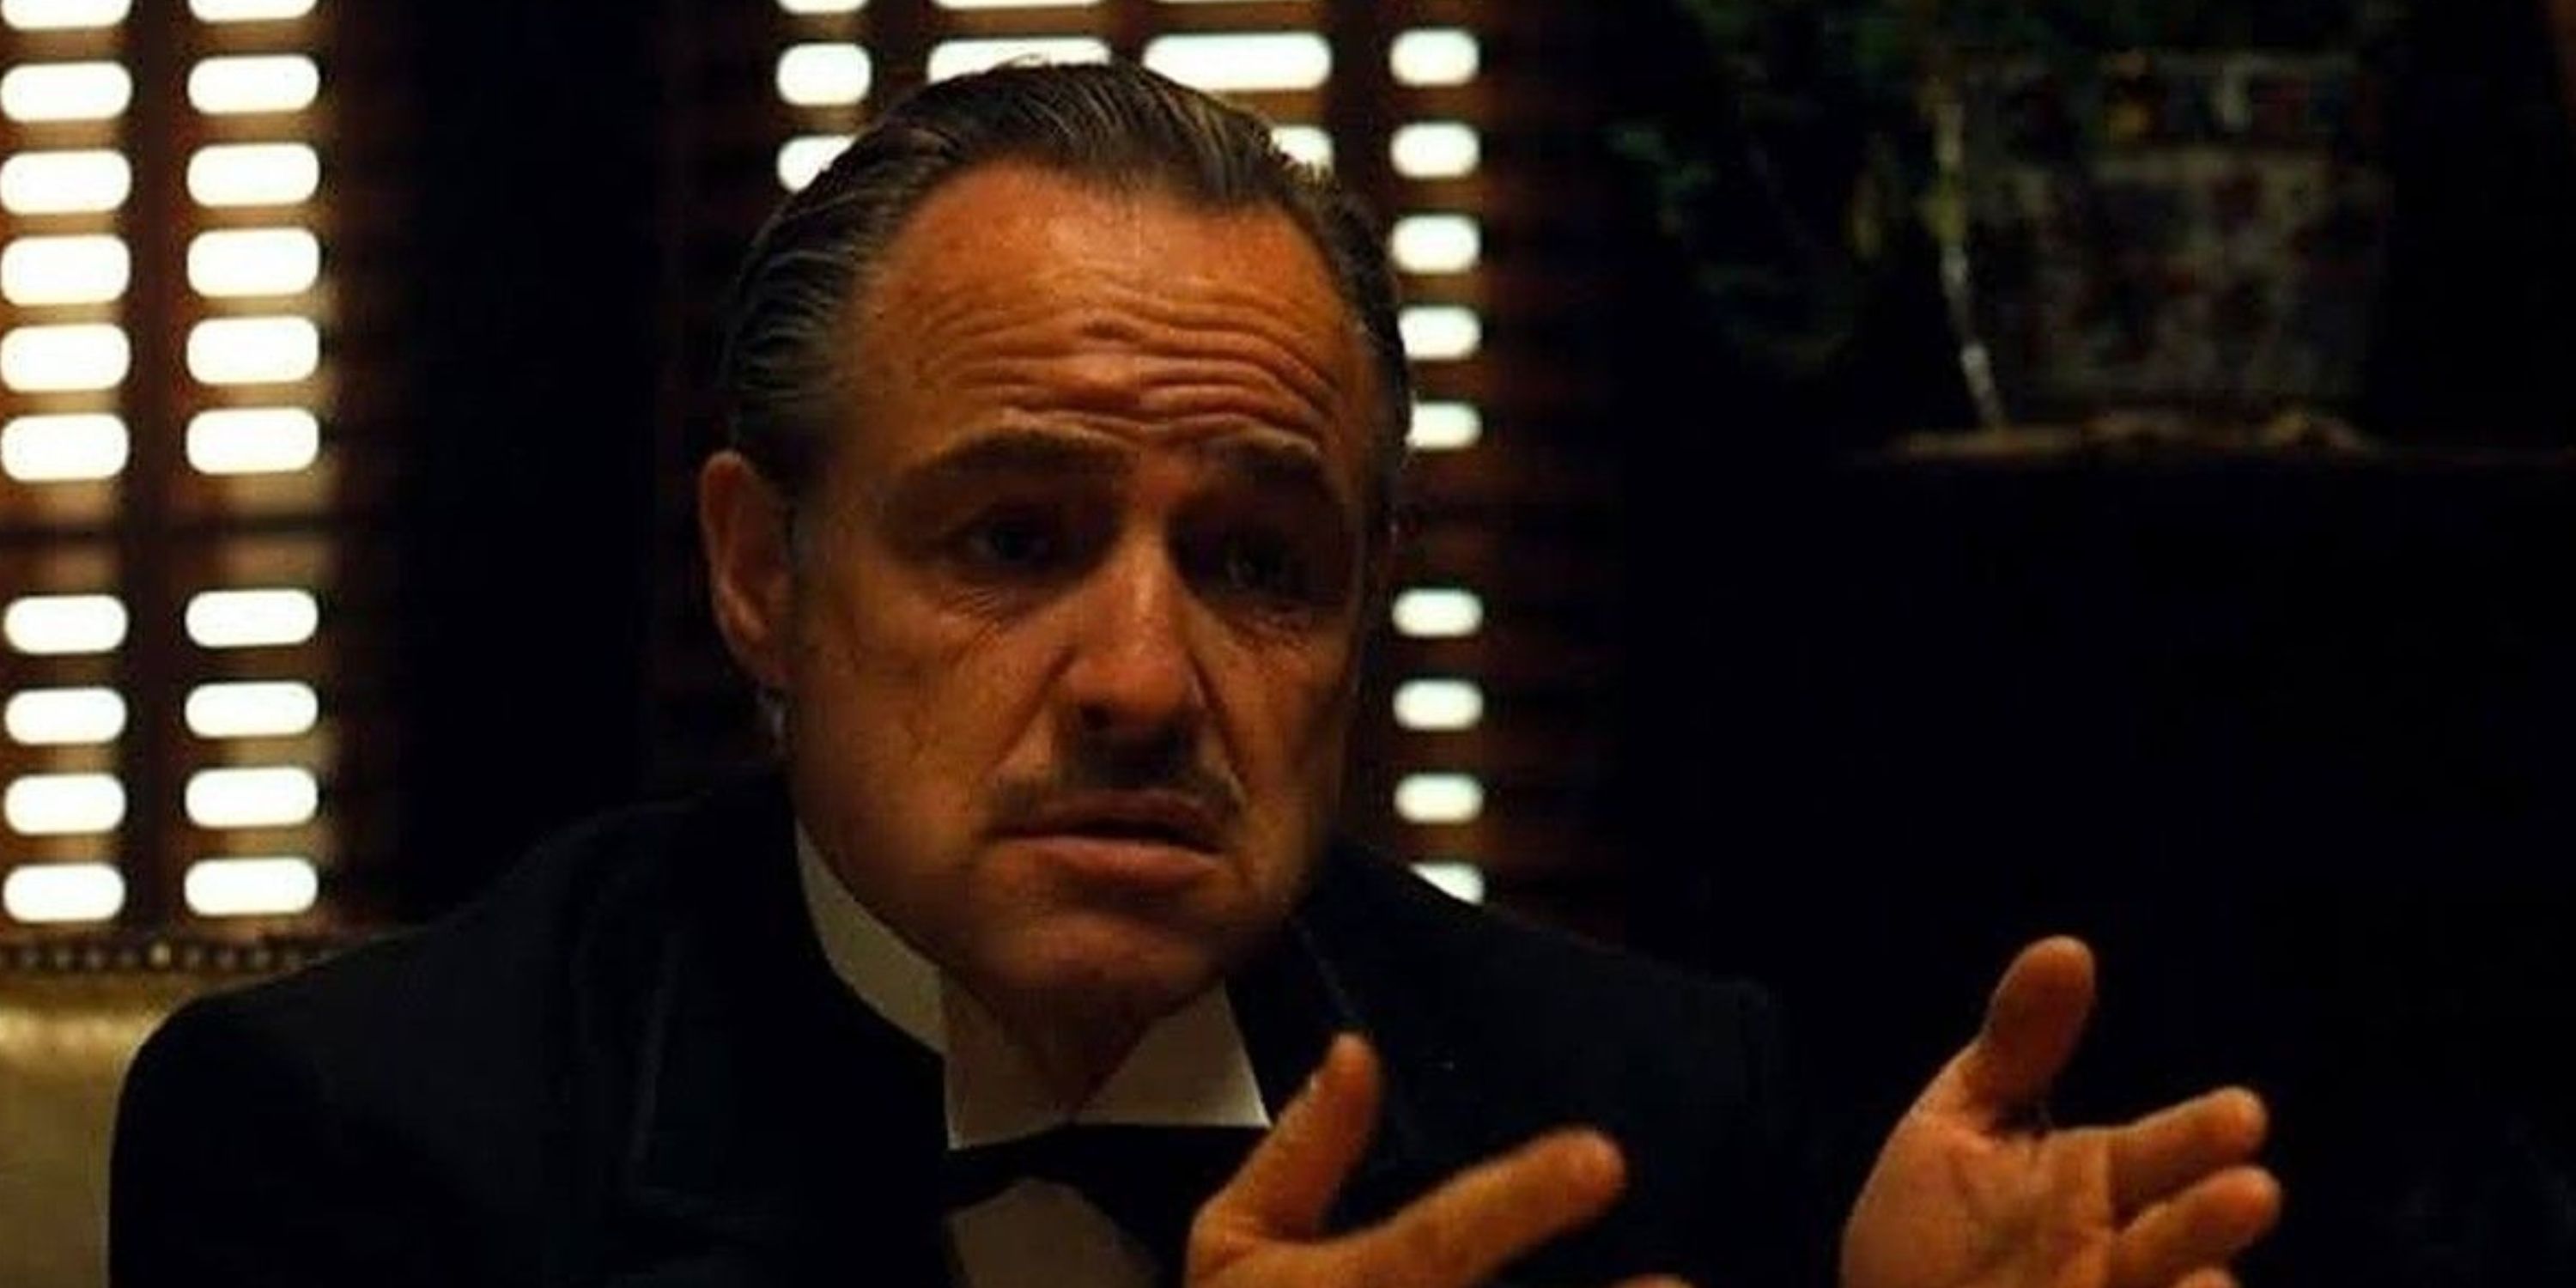 Vito Corleone sitting at his desk in The Godfather